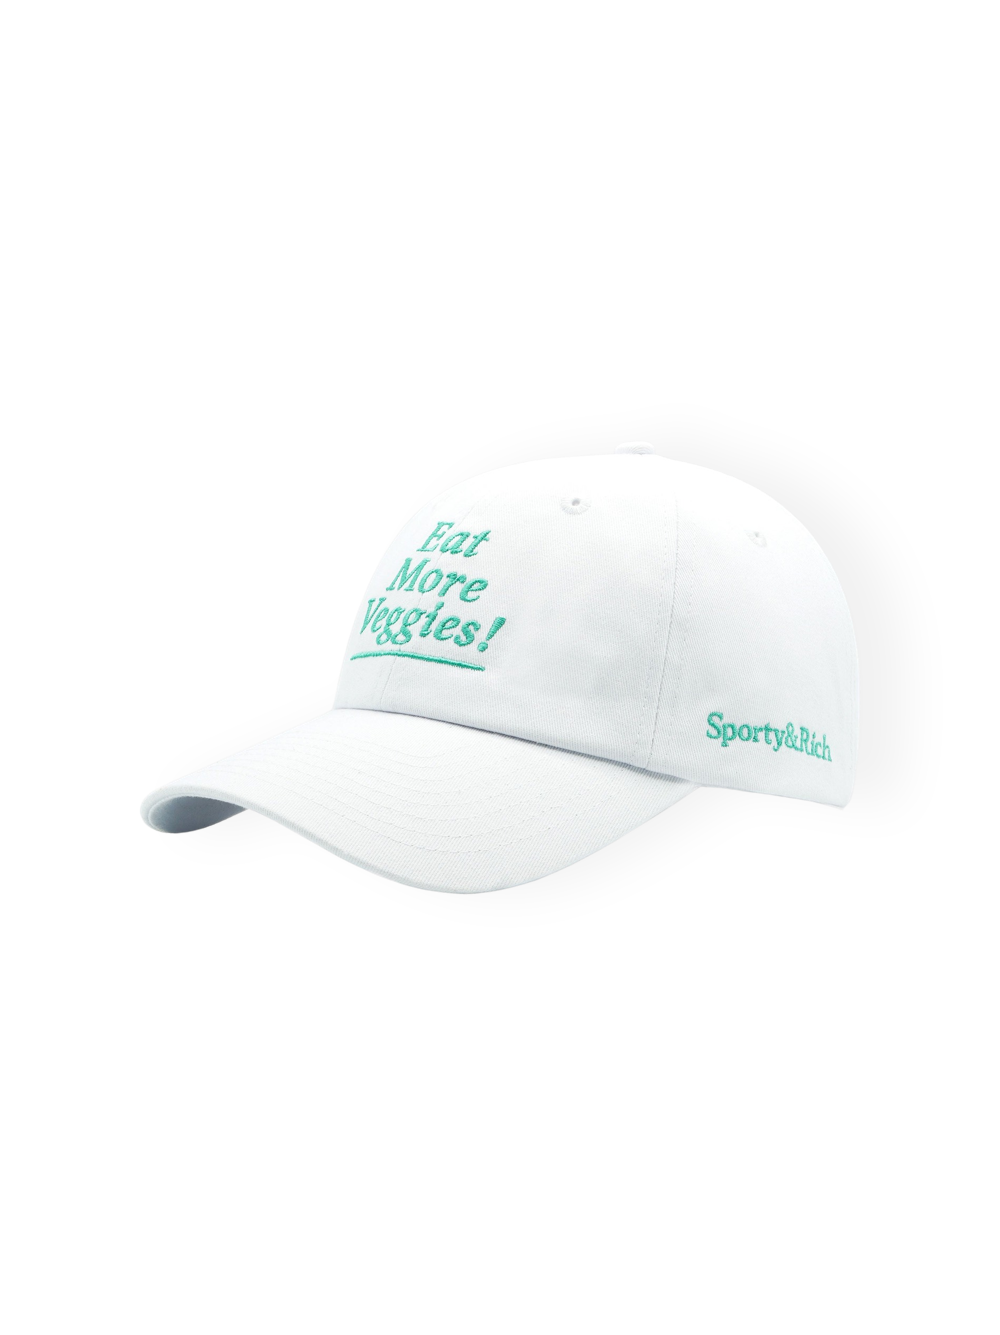 Sporty & Rich Eat More Veggies Hat in White/Amalfi Green